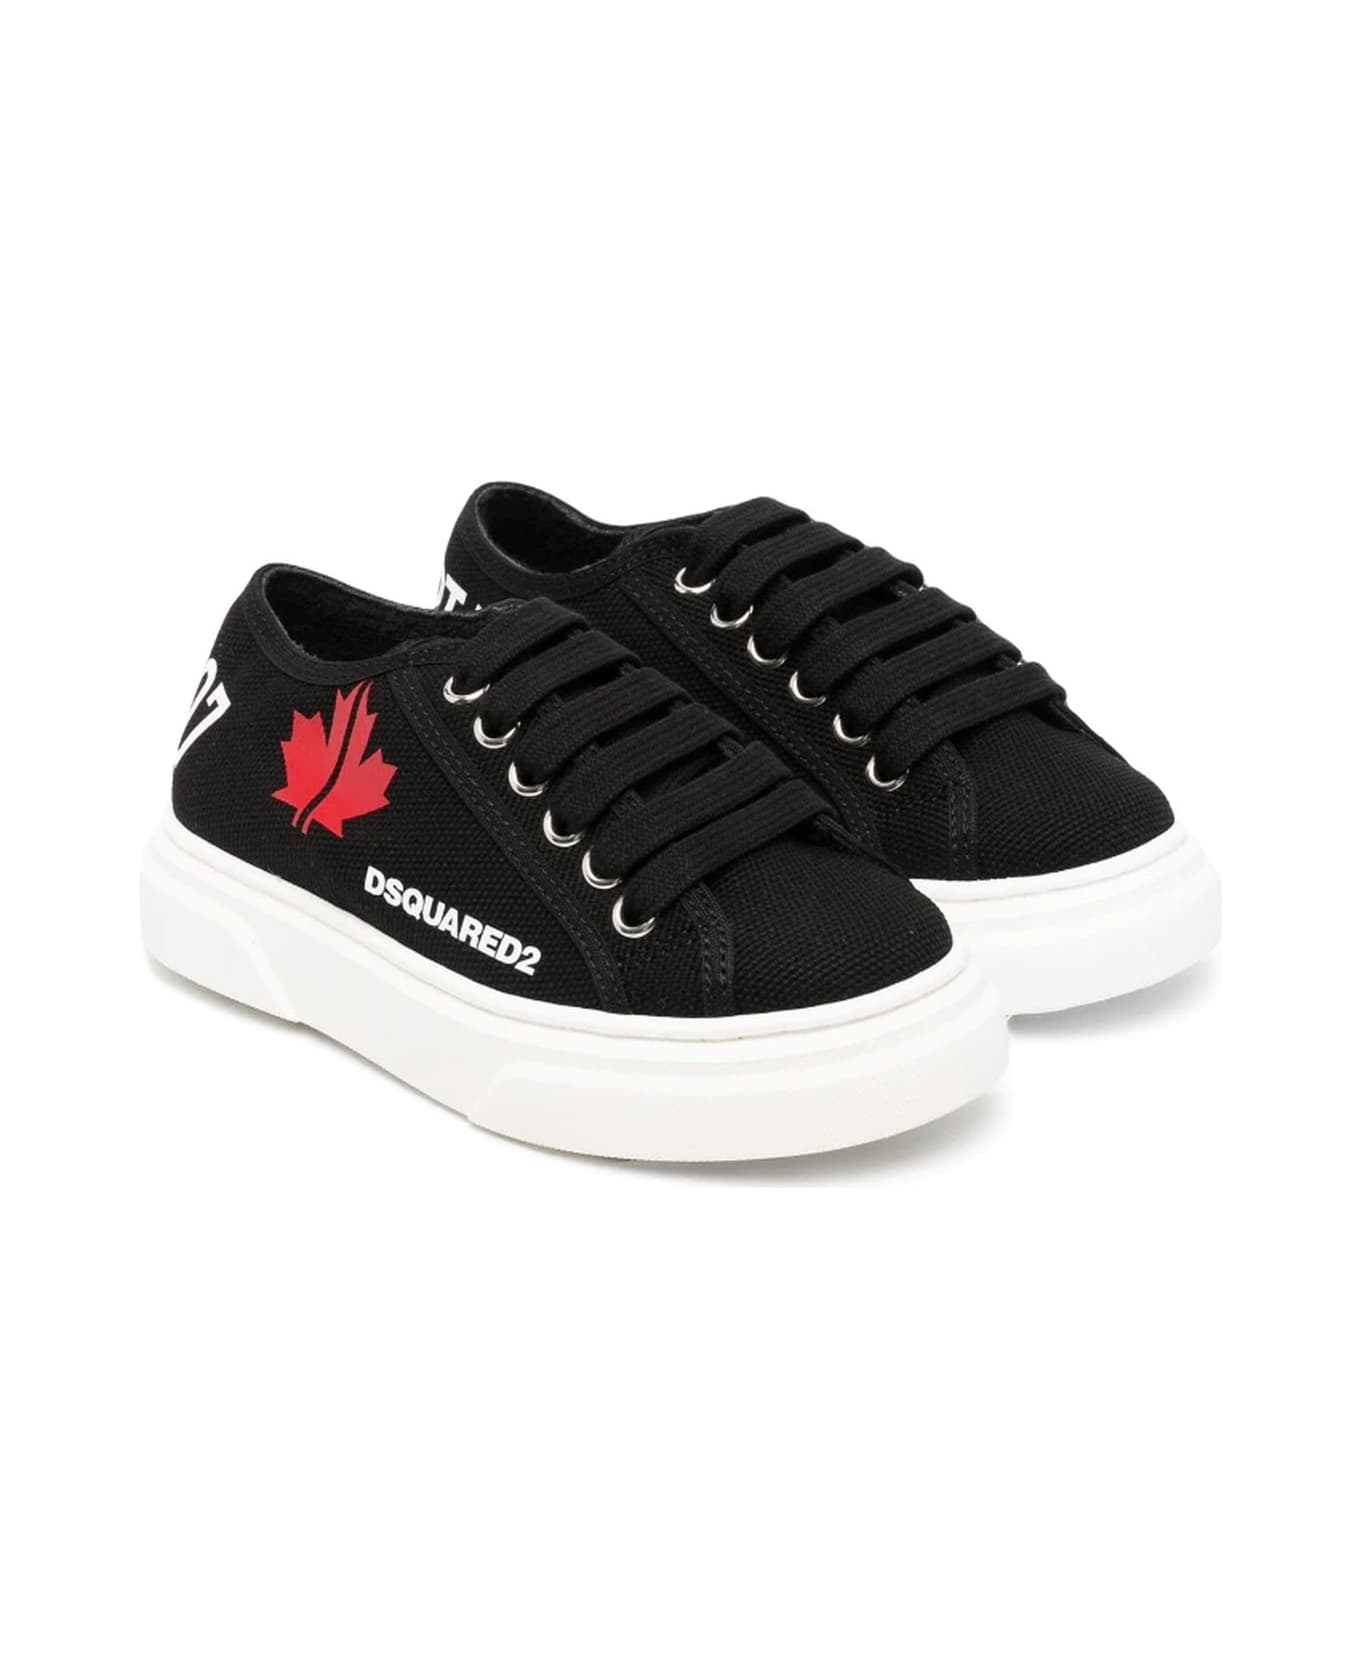 Dsquared2 Sneakers Black - Black